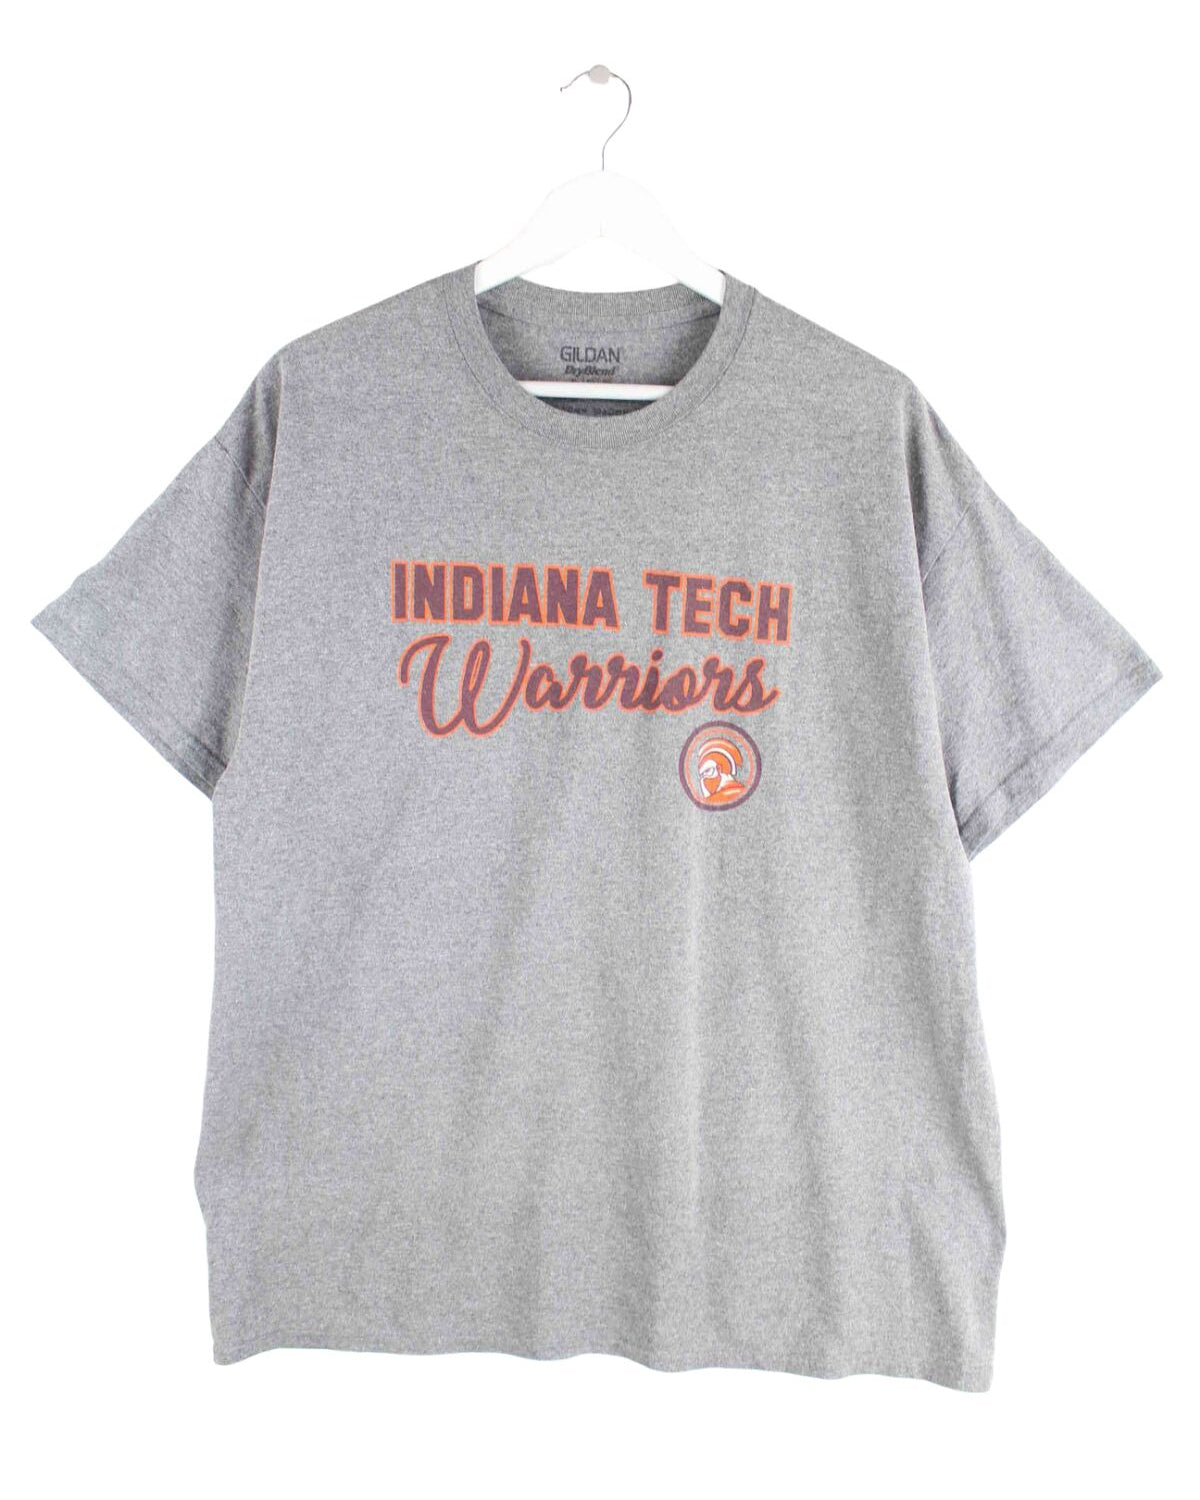 Gildan Indiana Tech Warriors T-Shirt Grau XL (front image)